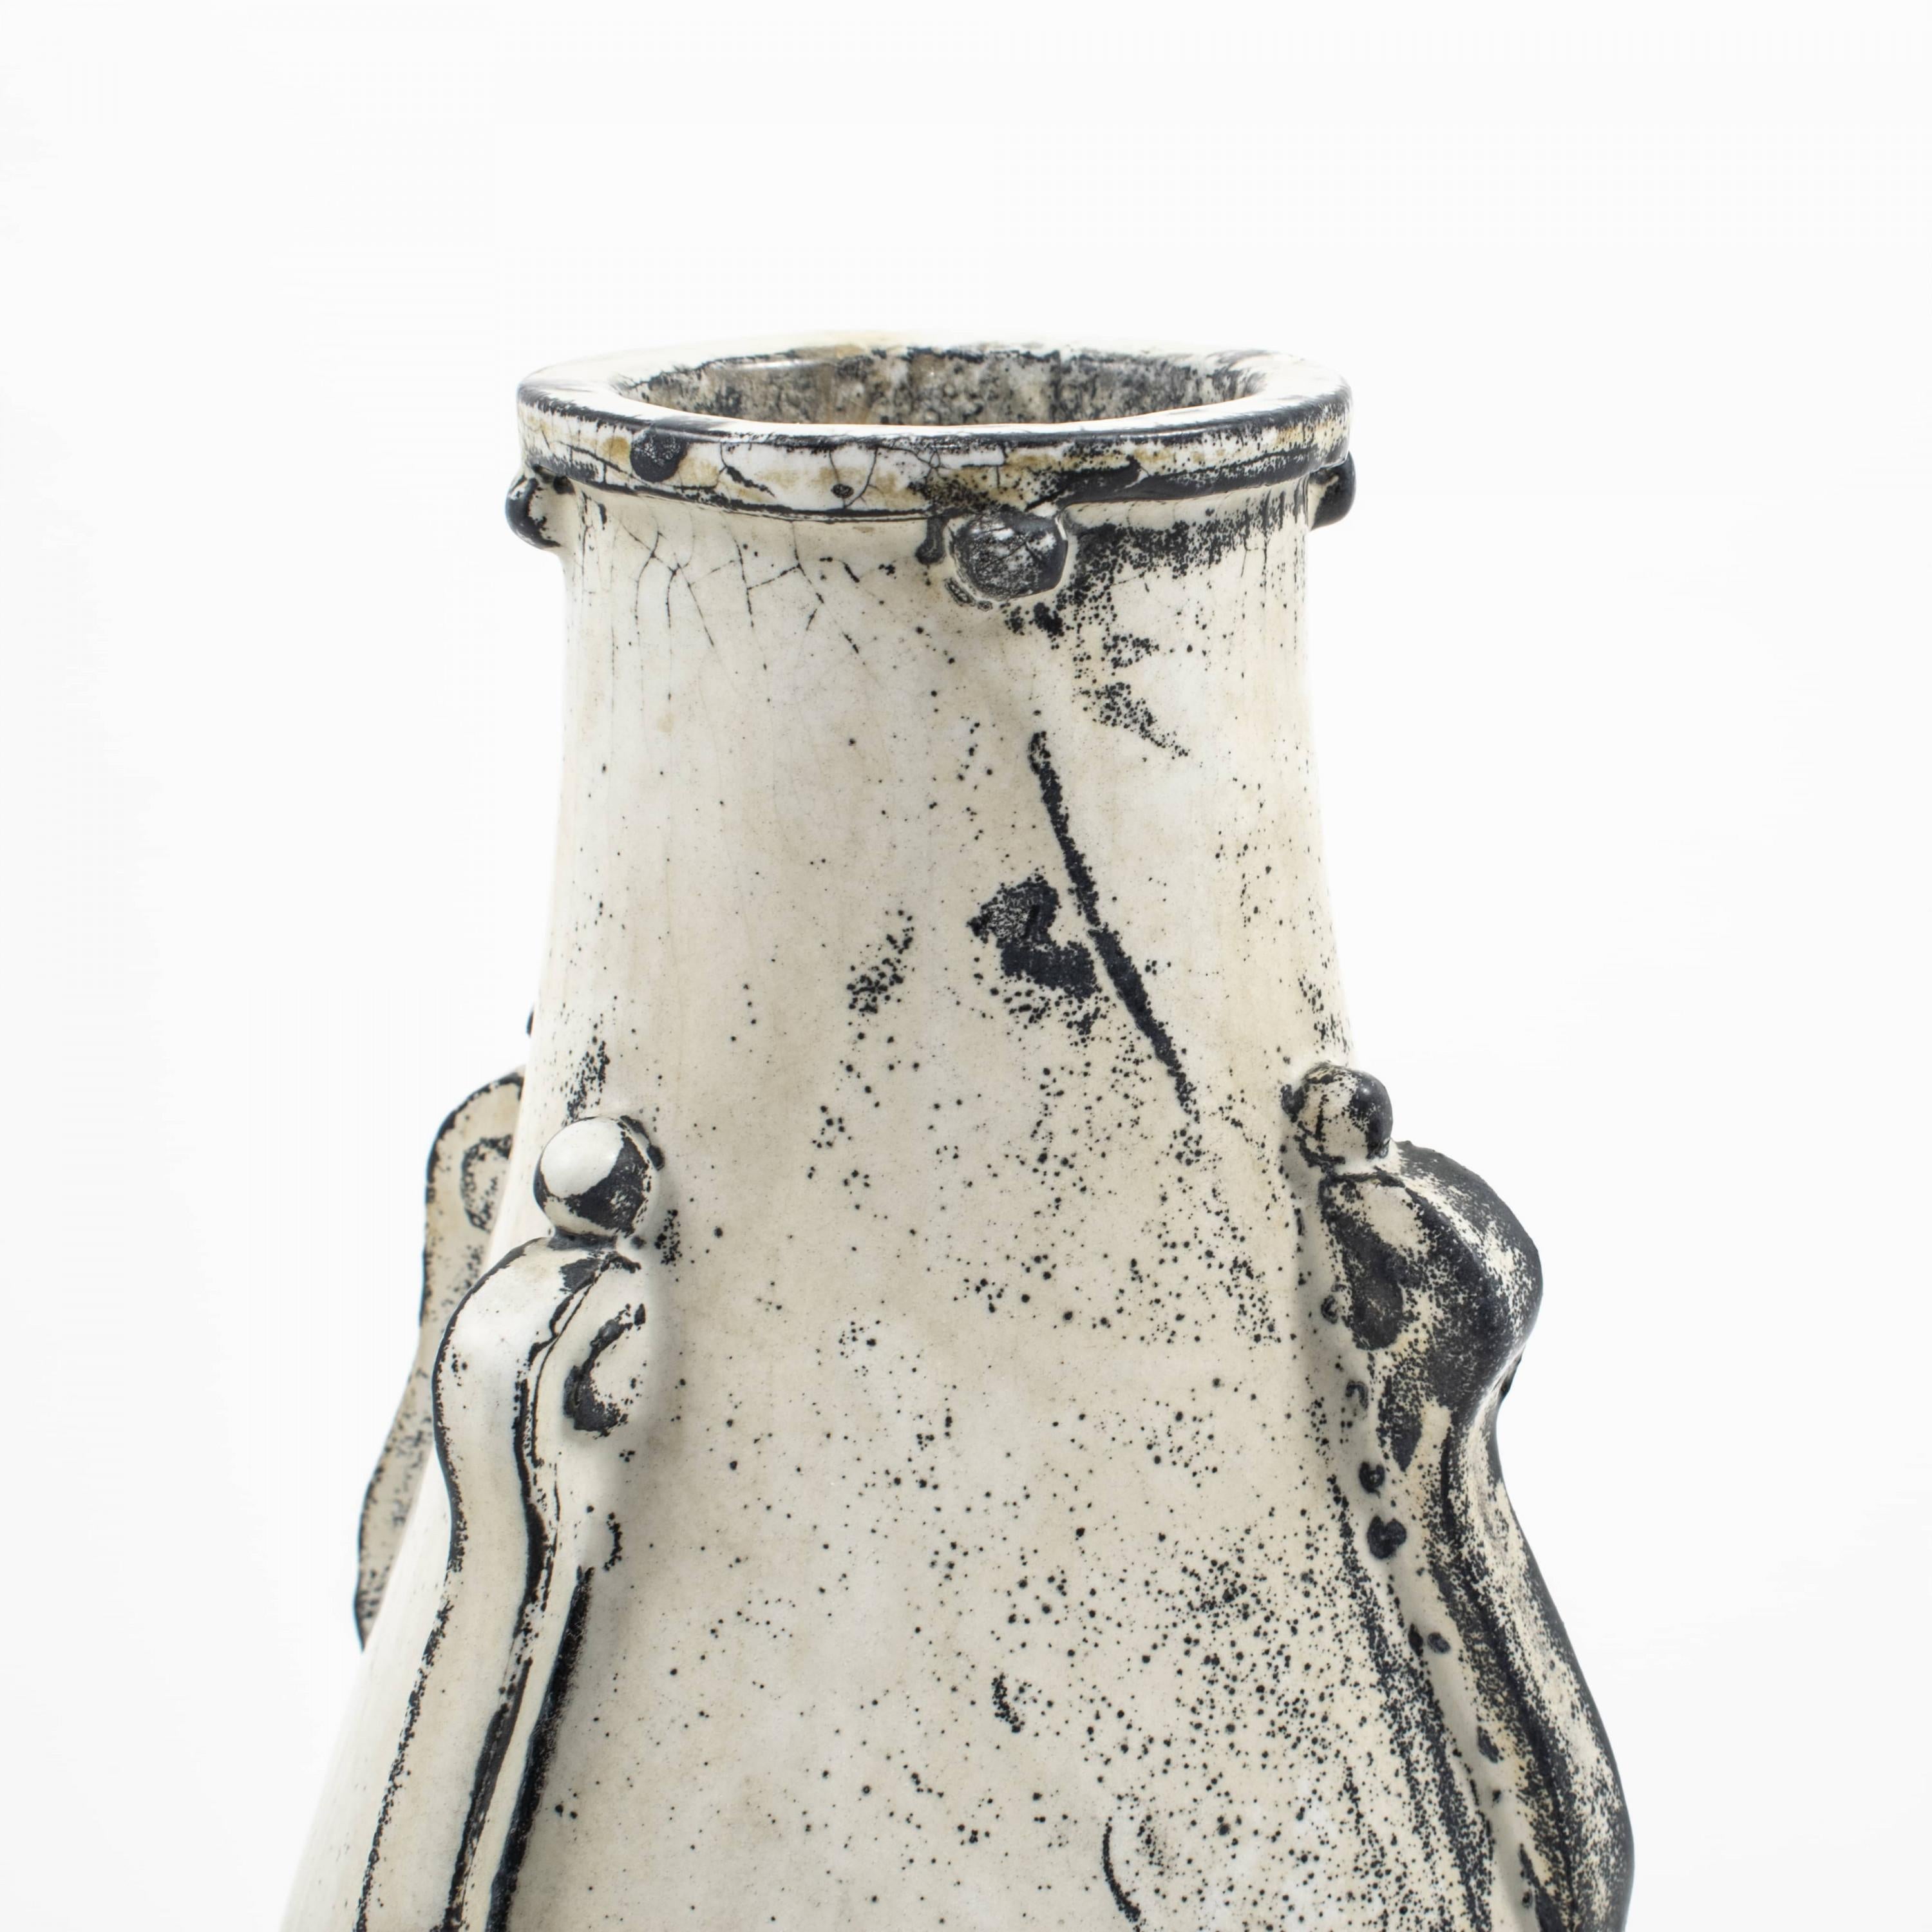 Designed by Svend Hammershøi 1873 - 1948.
Kähler, Denmark, glazed vase, 1926 - 1930s.
Glaze in black and white c. 1926 - 1928.

Jens Thirslund is the artistic leader who came up with the black and white glaze in 1926.